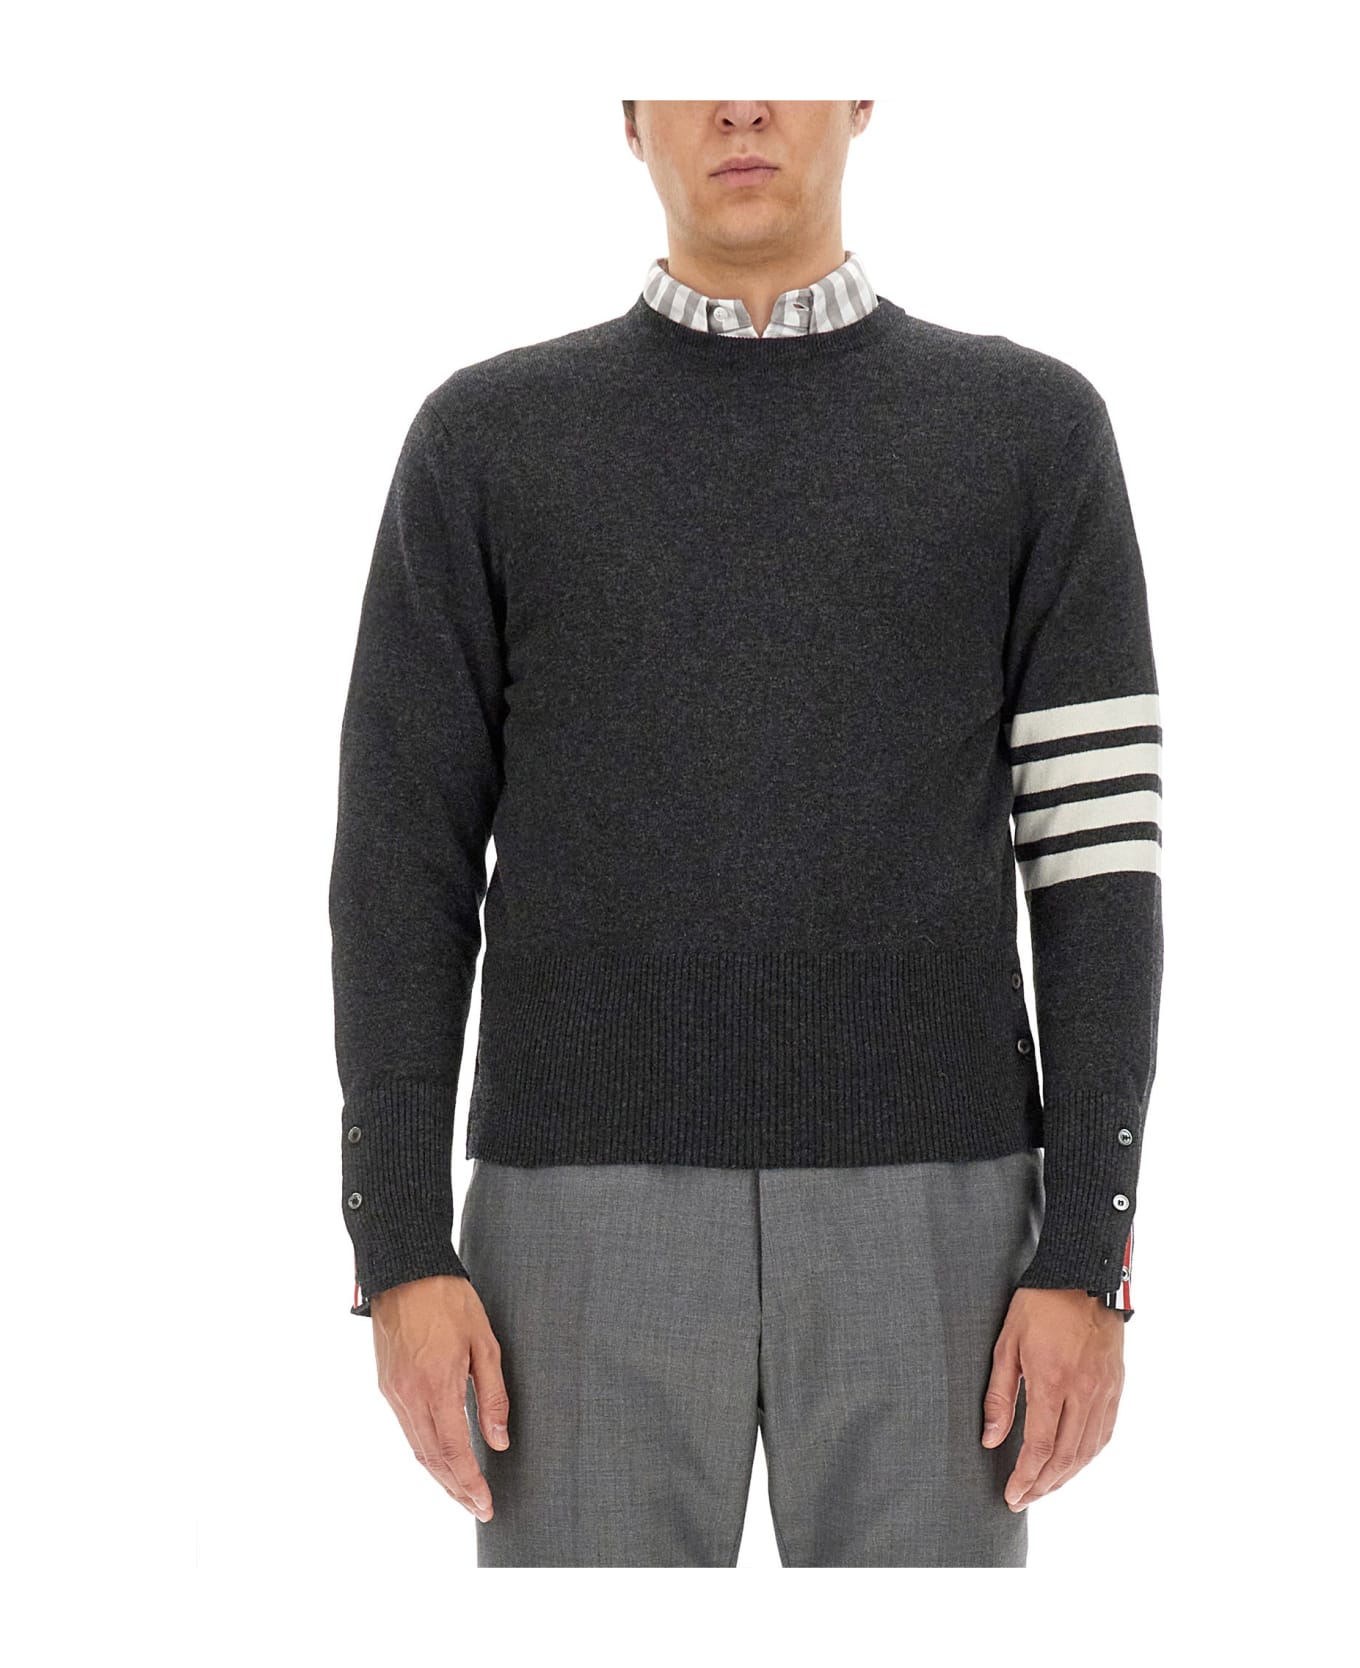 Thom Browne Cashmere Sweater - dark grey